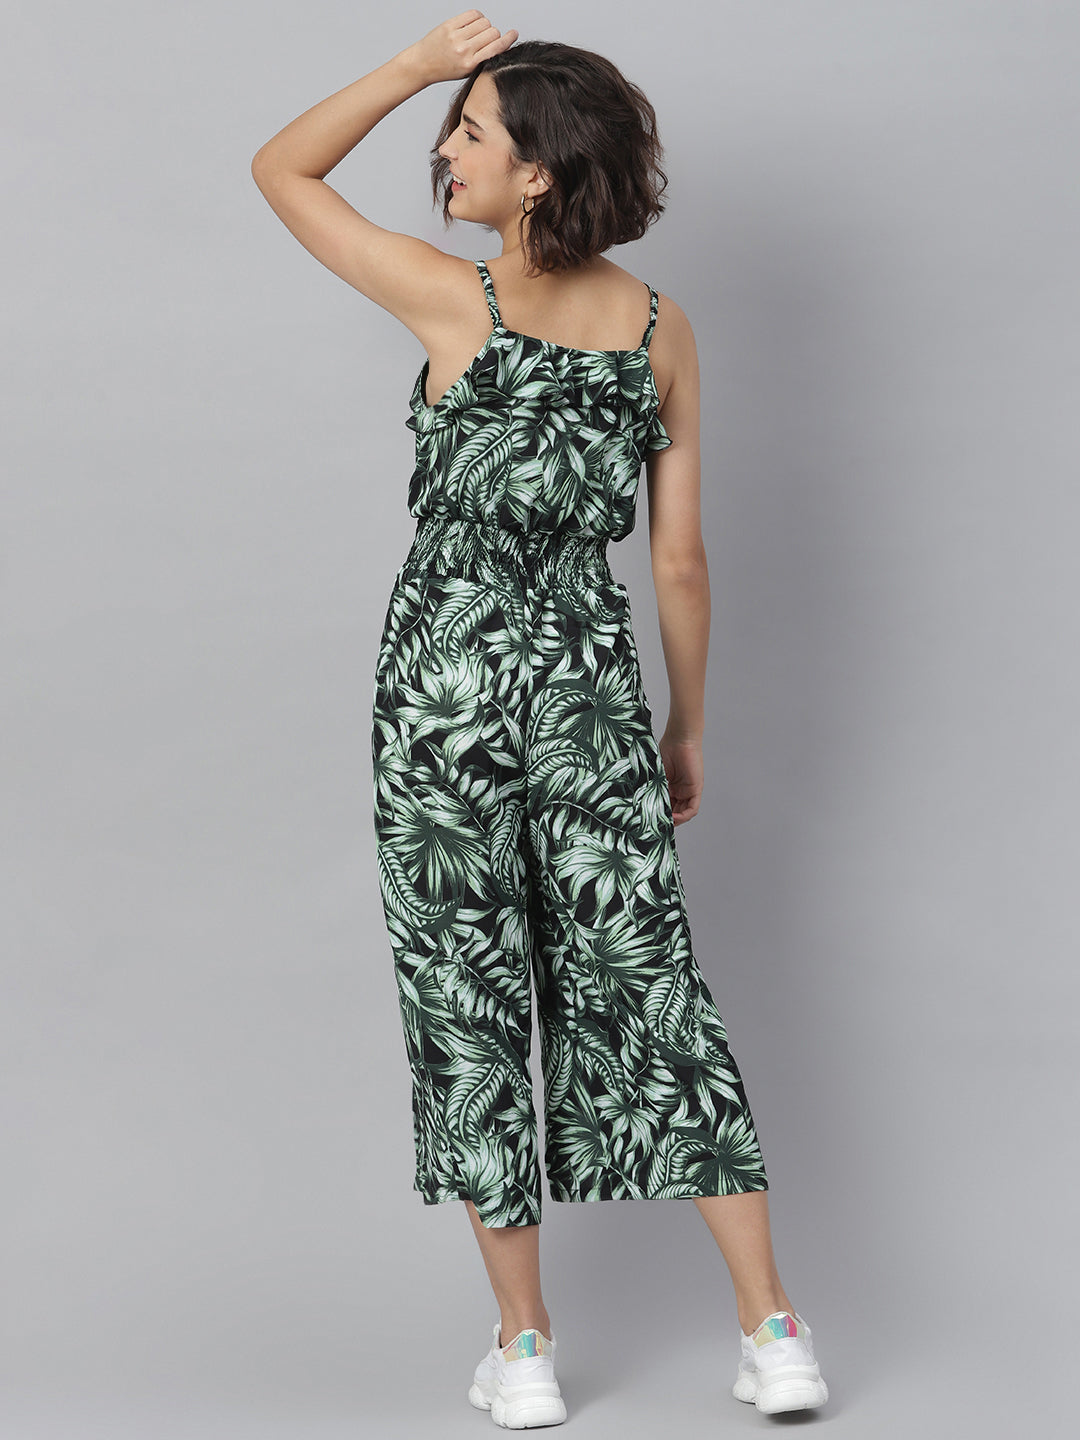 Women's printed Jumpsuit with slit Pants - StyleStone